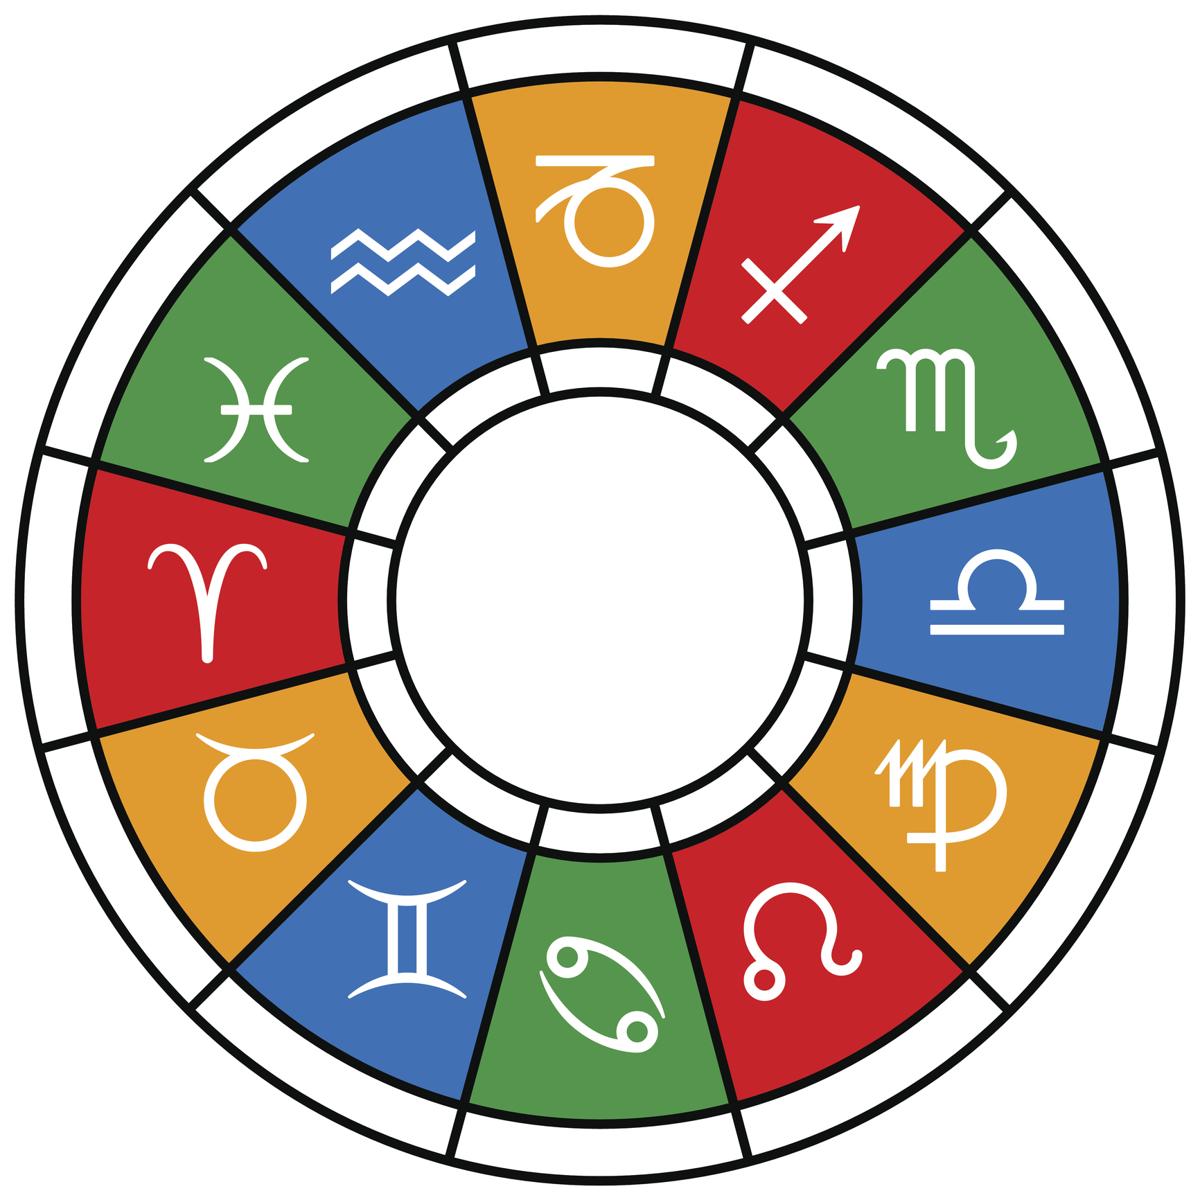 Chinese Zodiac: 12 Animal Signs, Compatibility, Horoscopes